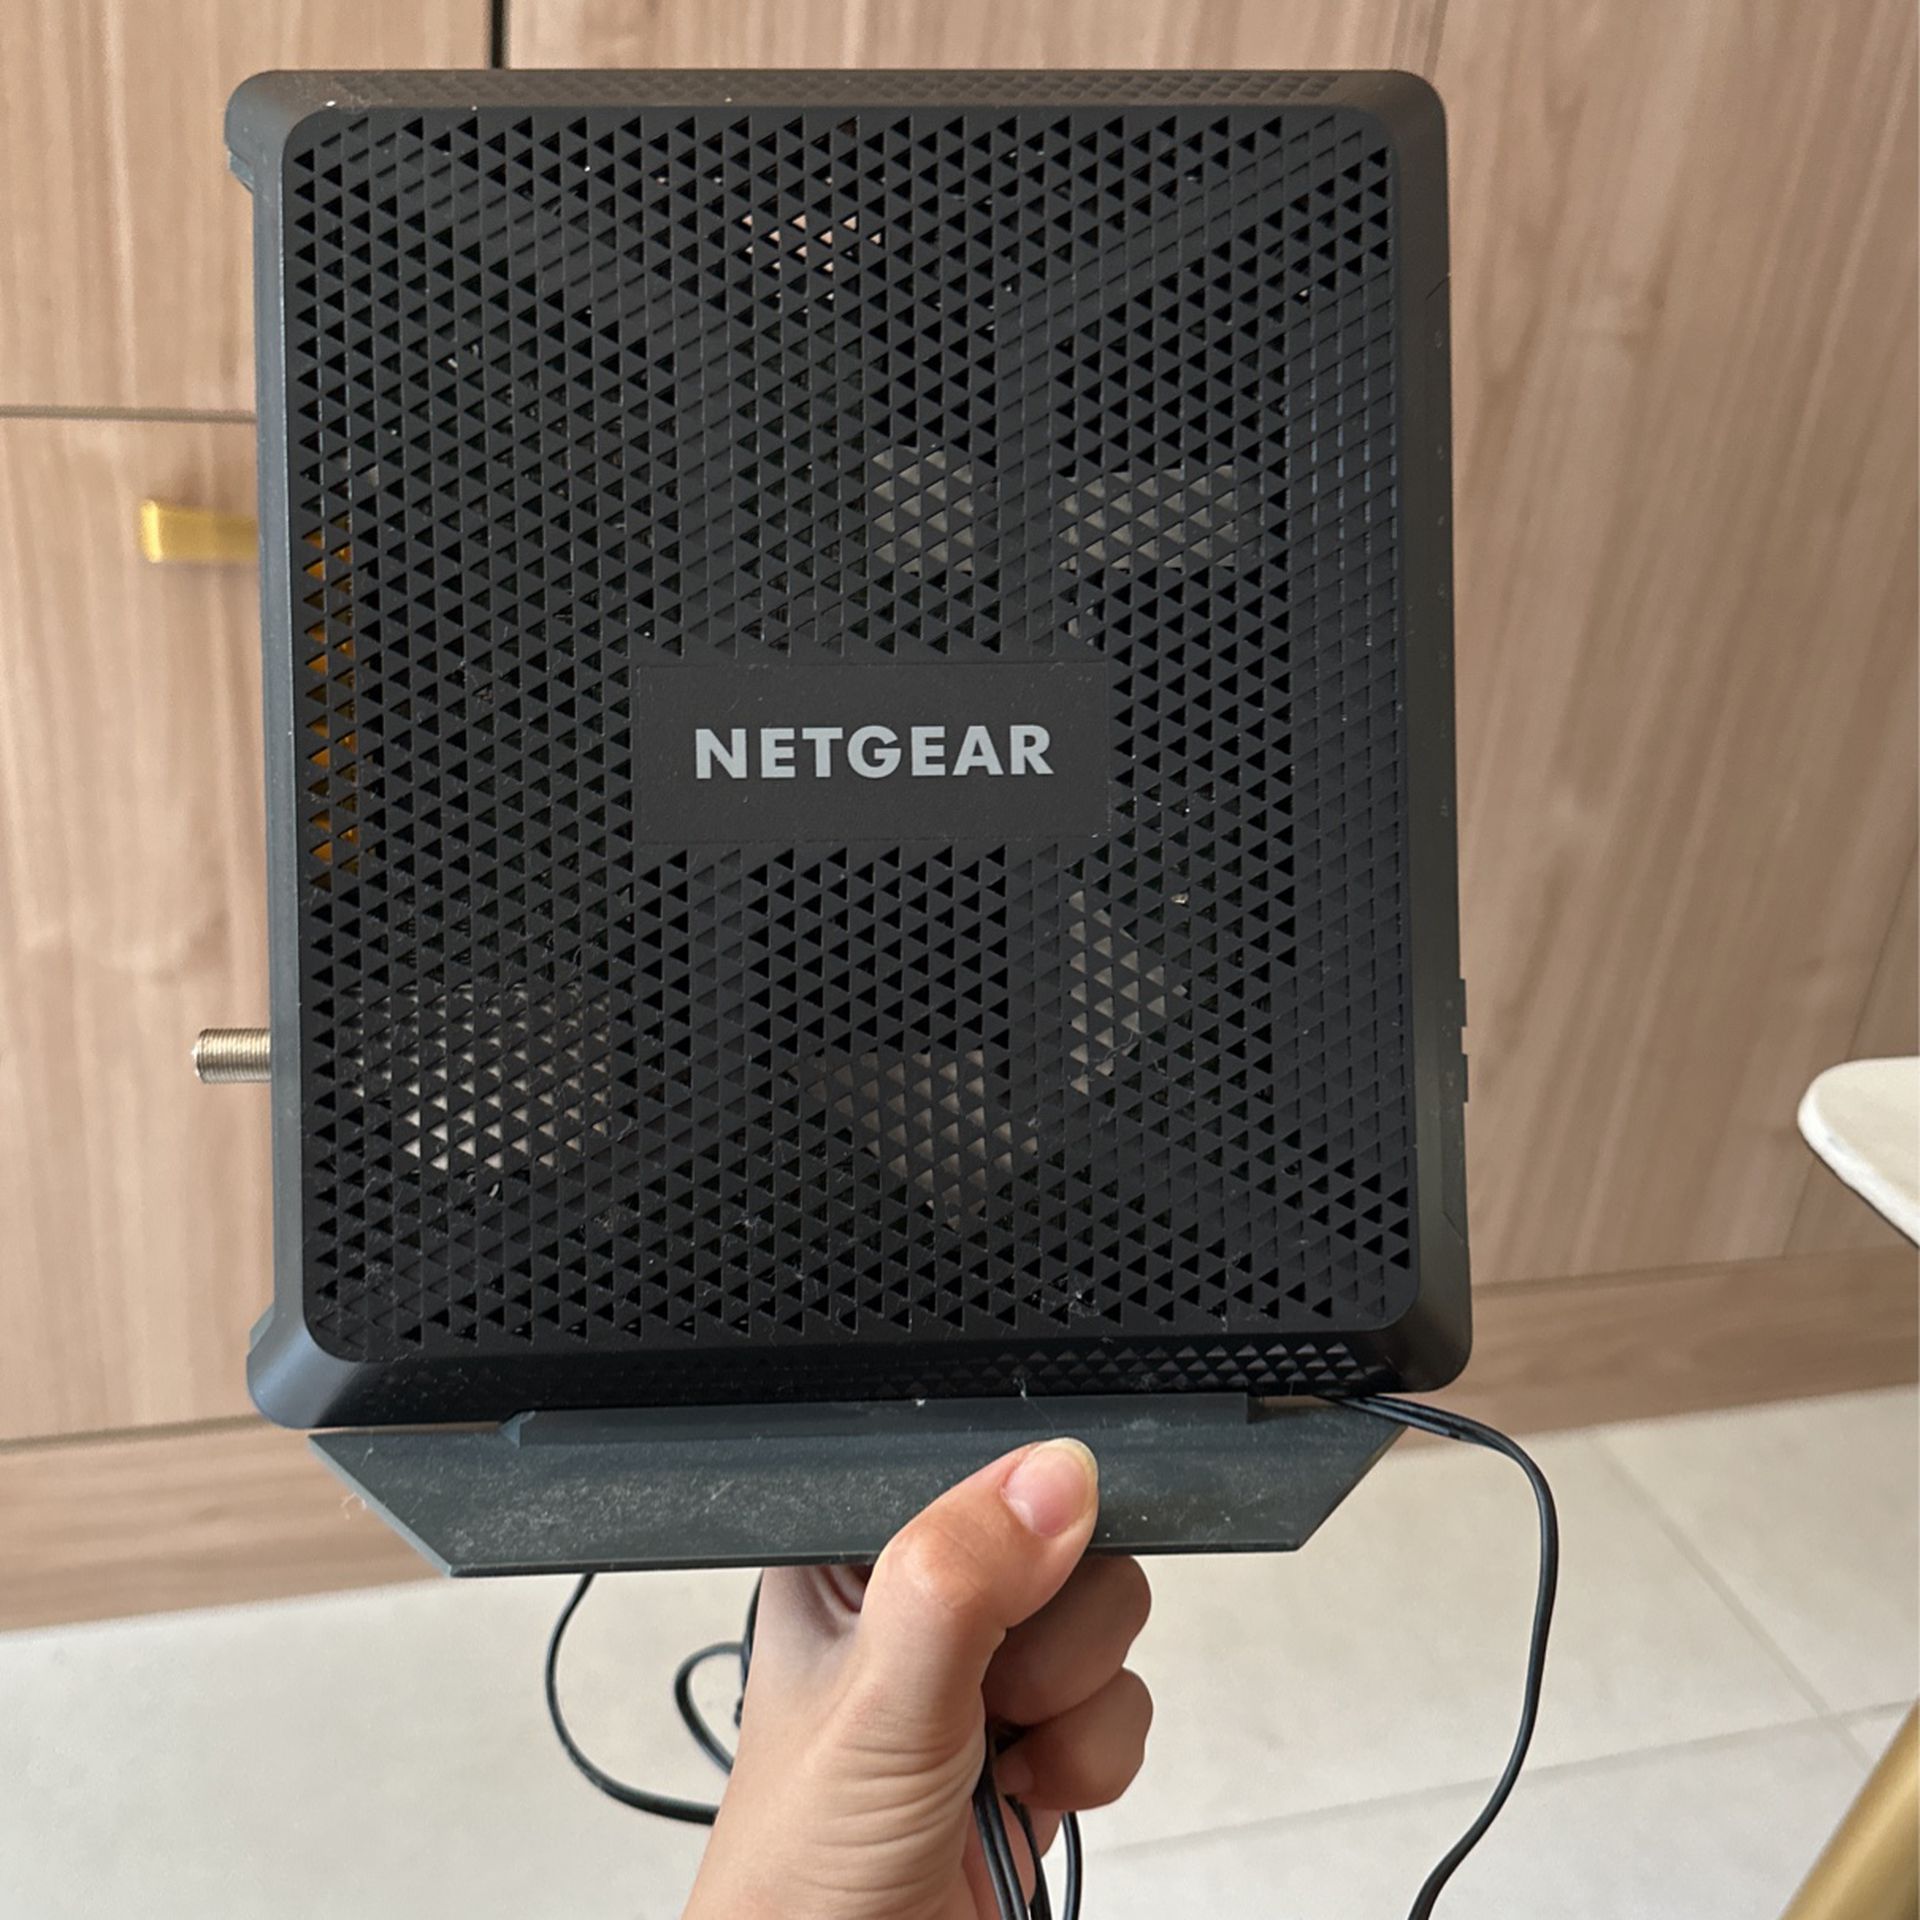 Netgear AC1900 WiFi Cable Modem Router Model C7000